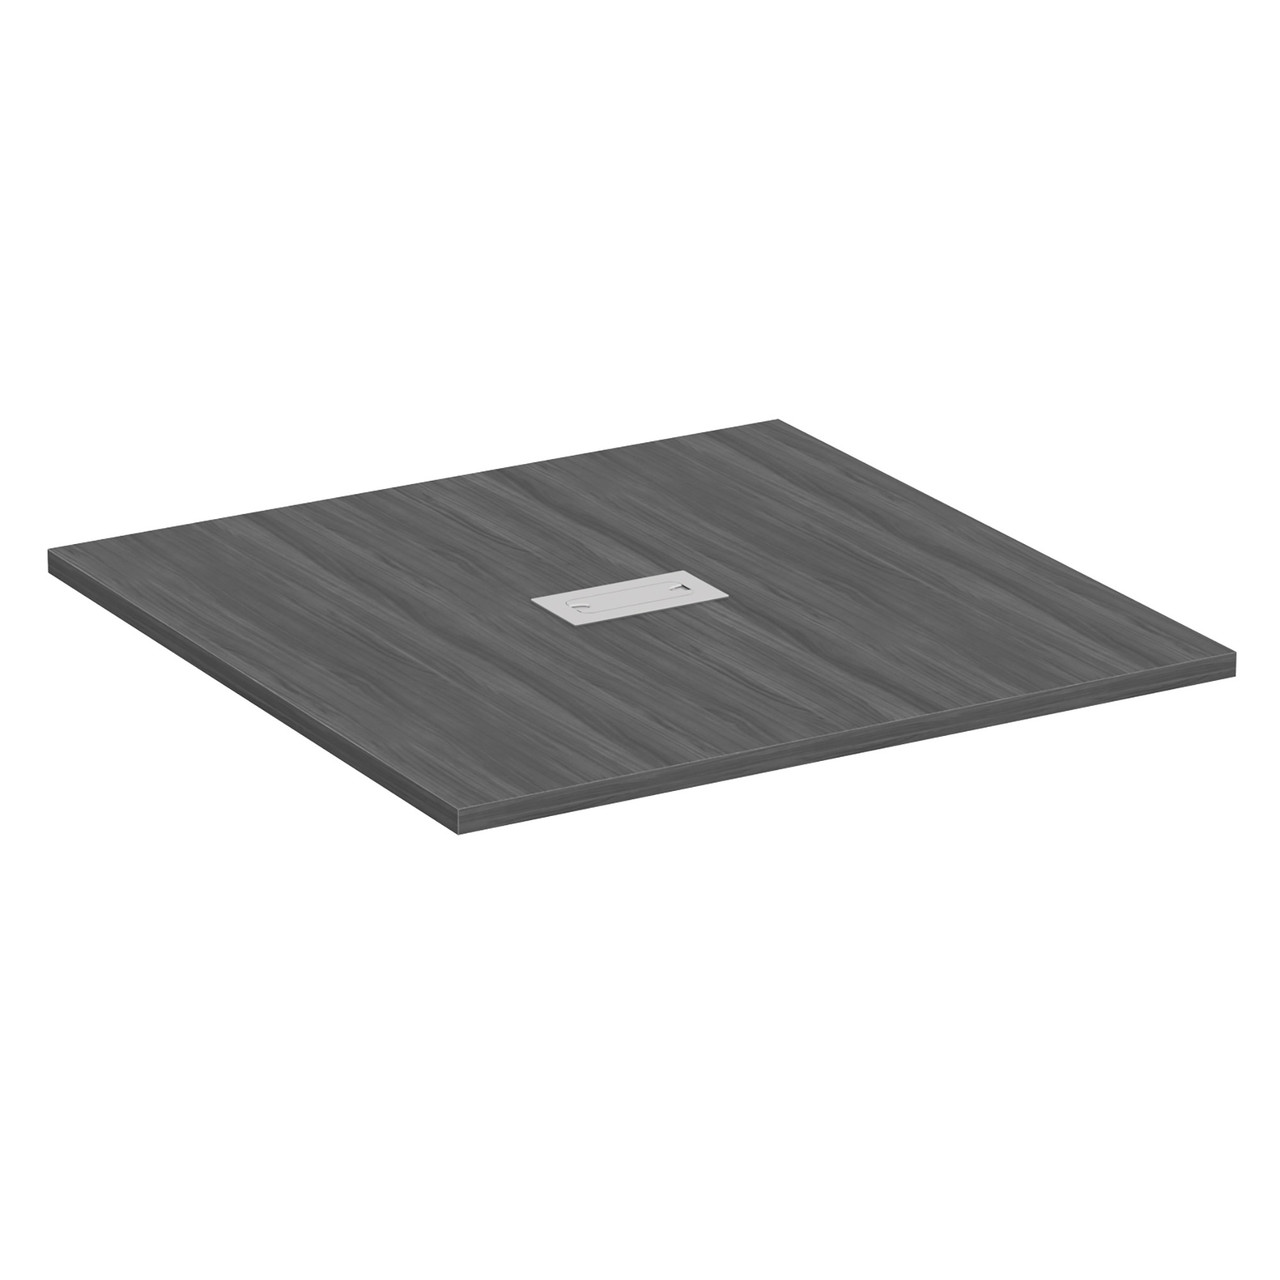 4Legs4Pets Place Board – 30x30 Premium Square Cot